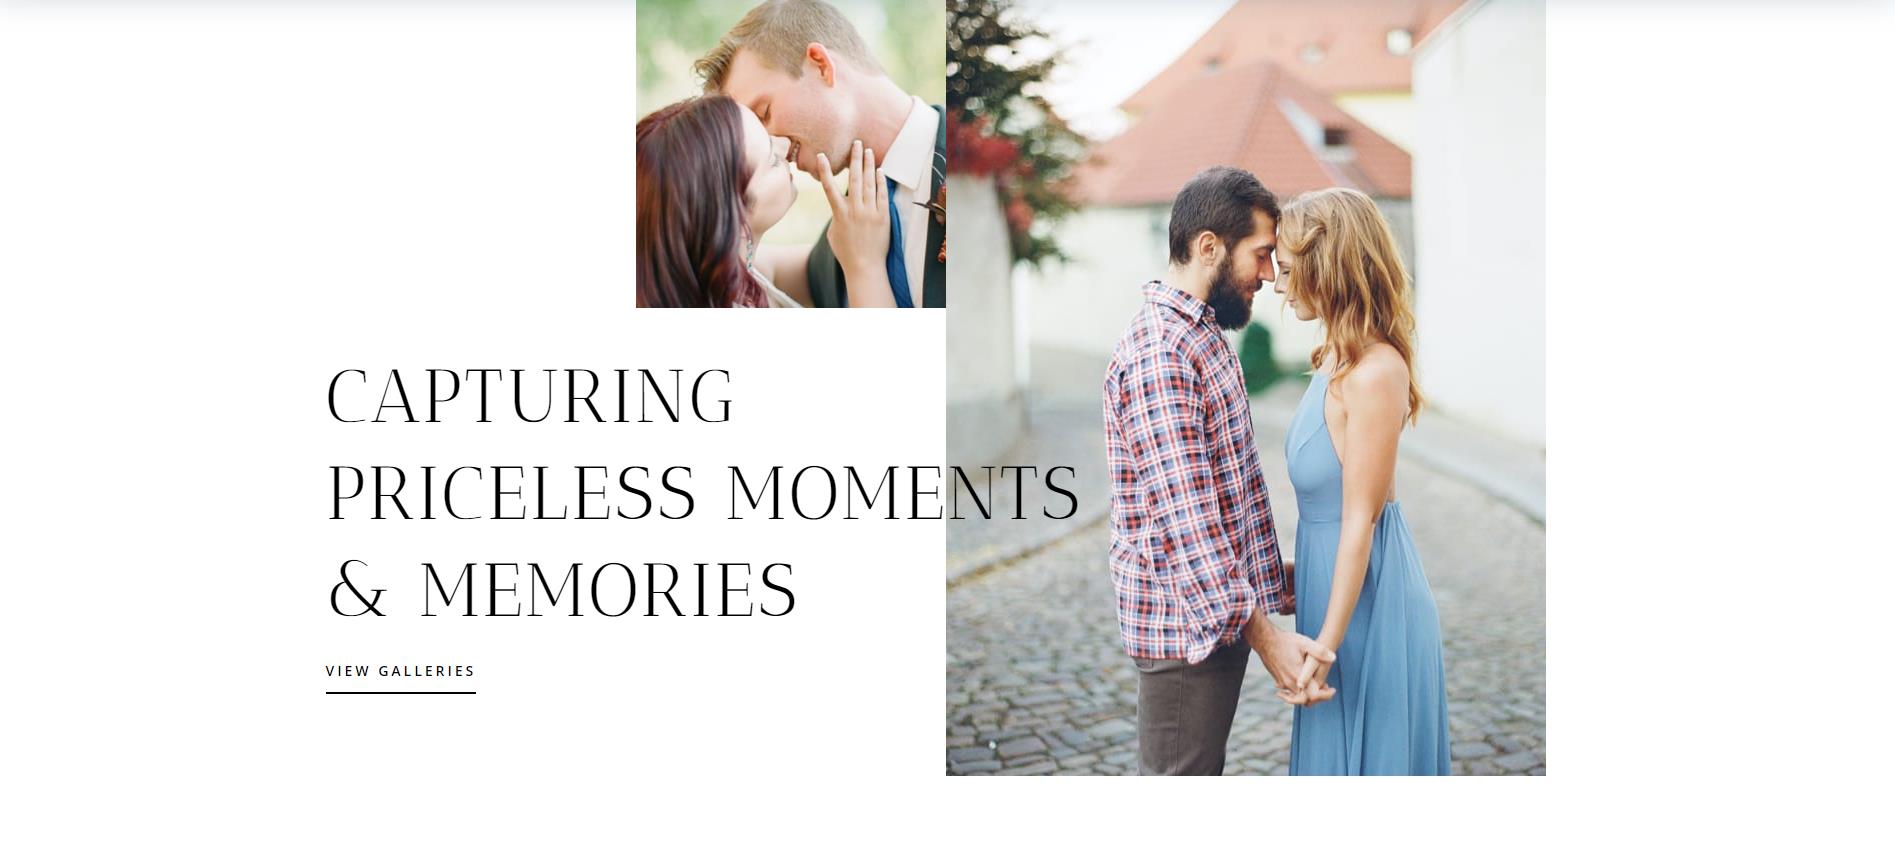 Wedding Photographer Website